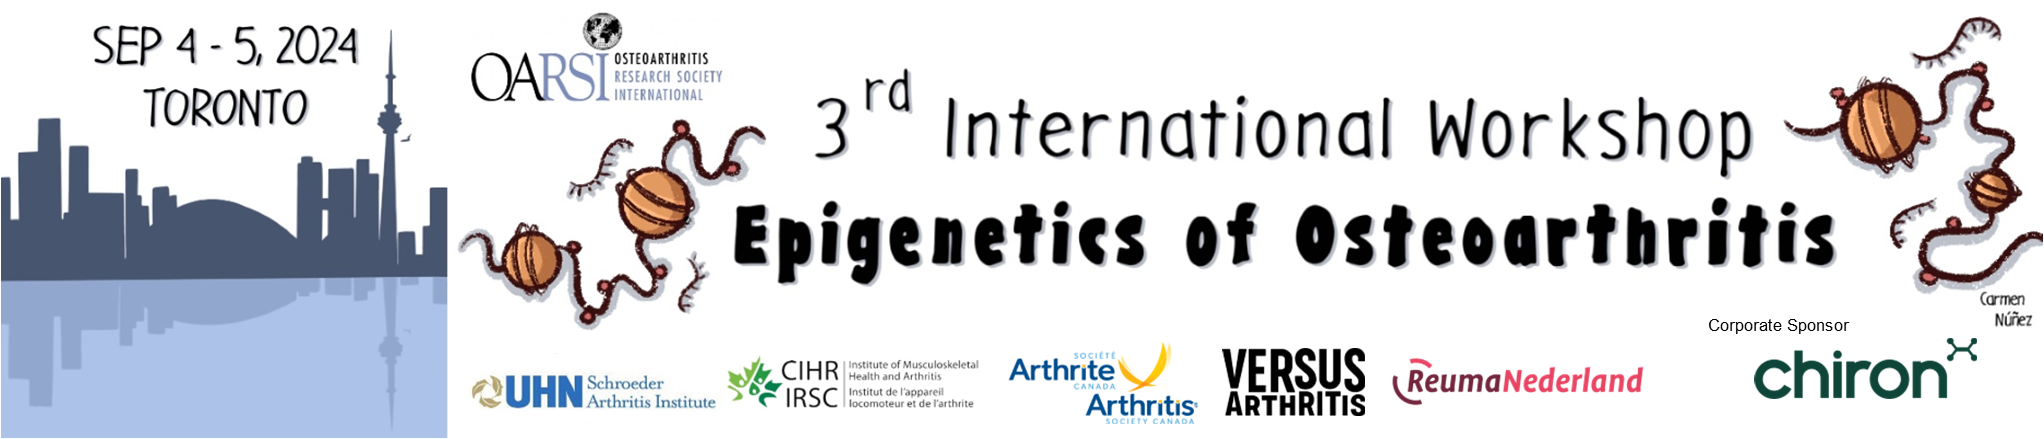 3rd International Workshop on the Epigenetics of Osteoarthritis